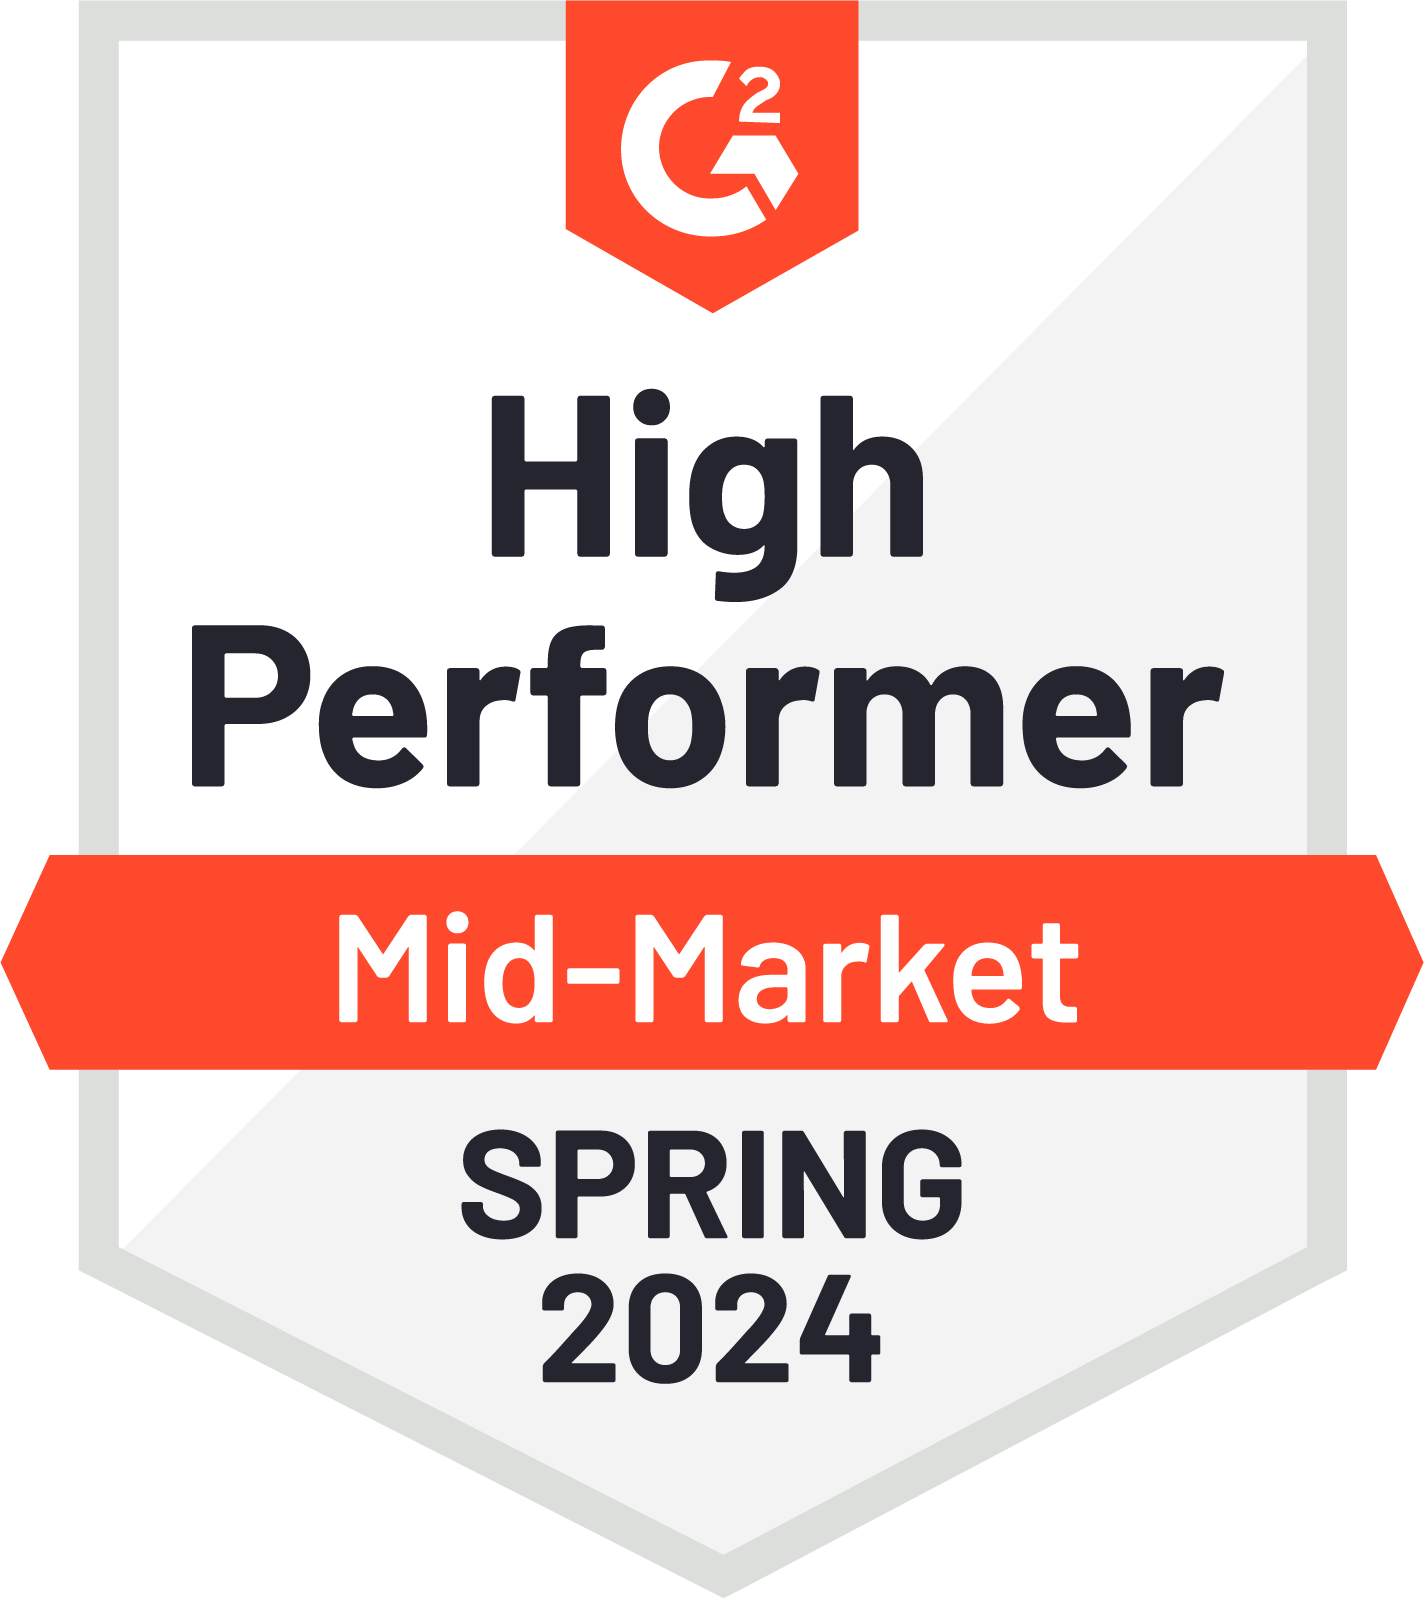 G2 Badge High Performer spring 2024